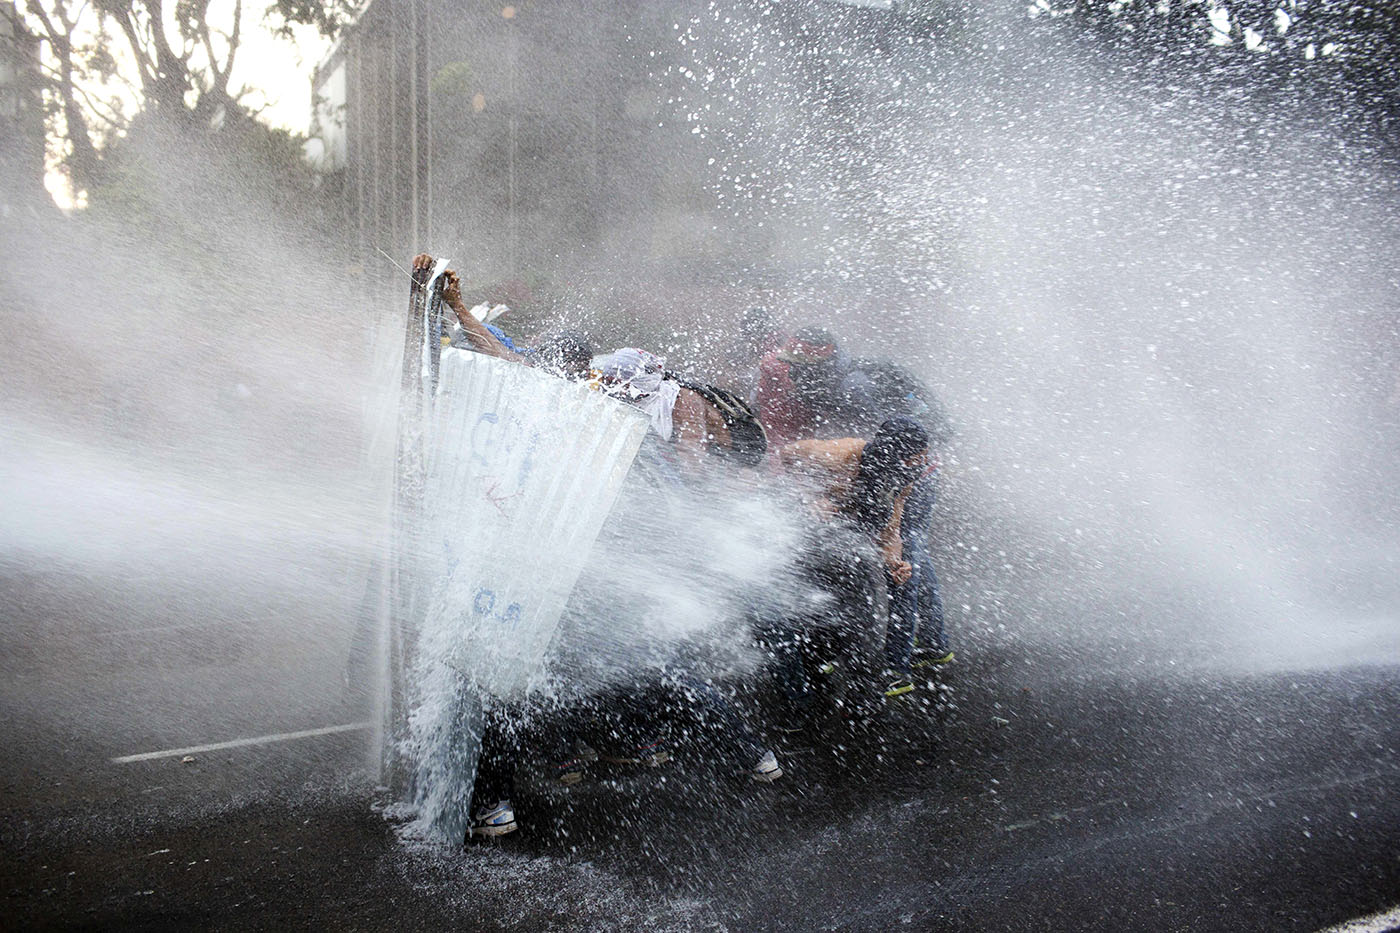 APTOPIX Venezuela Protests